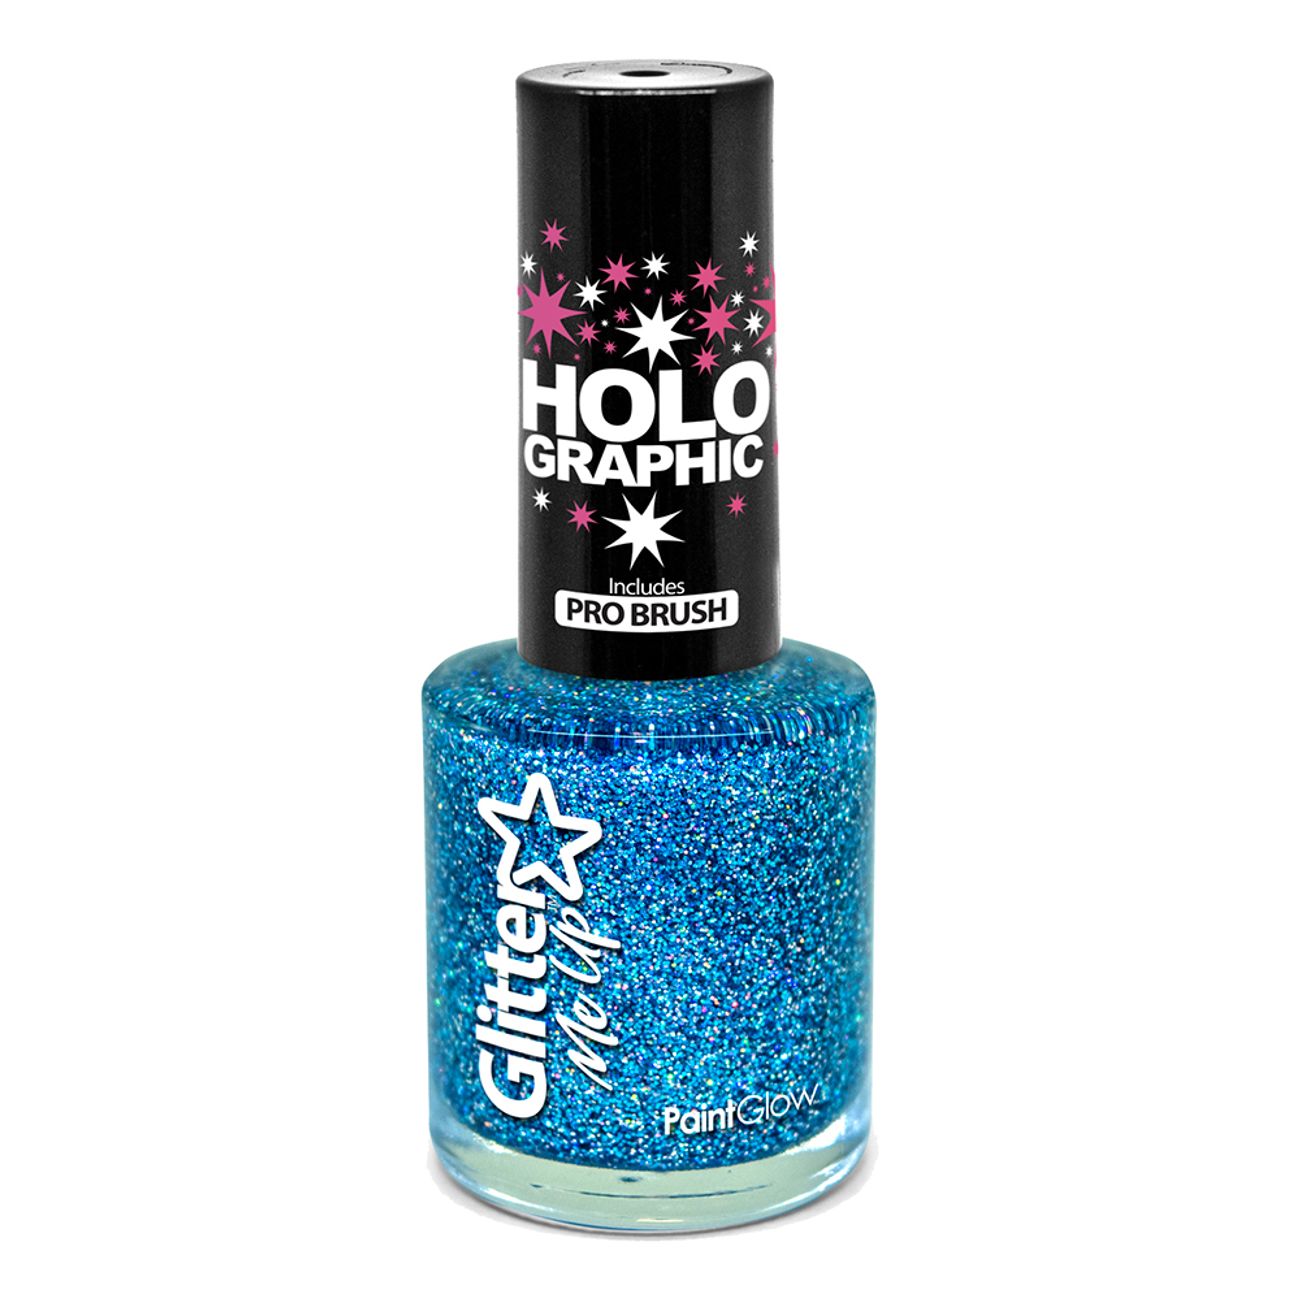 paintglow-holografisk-glitter-nail-polish-10ml-loose-4